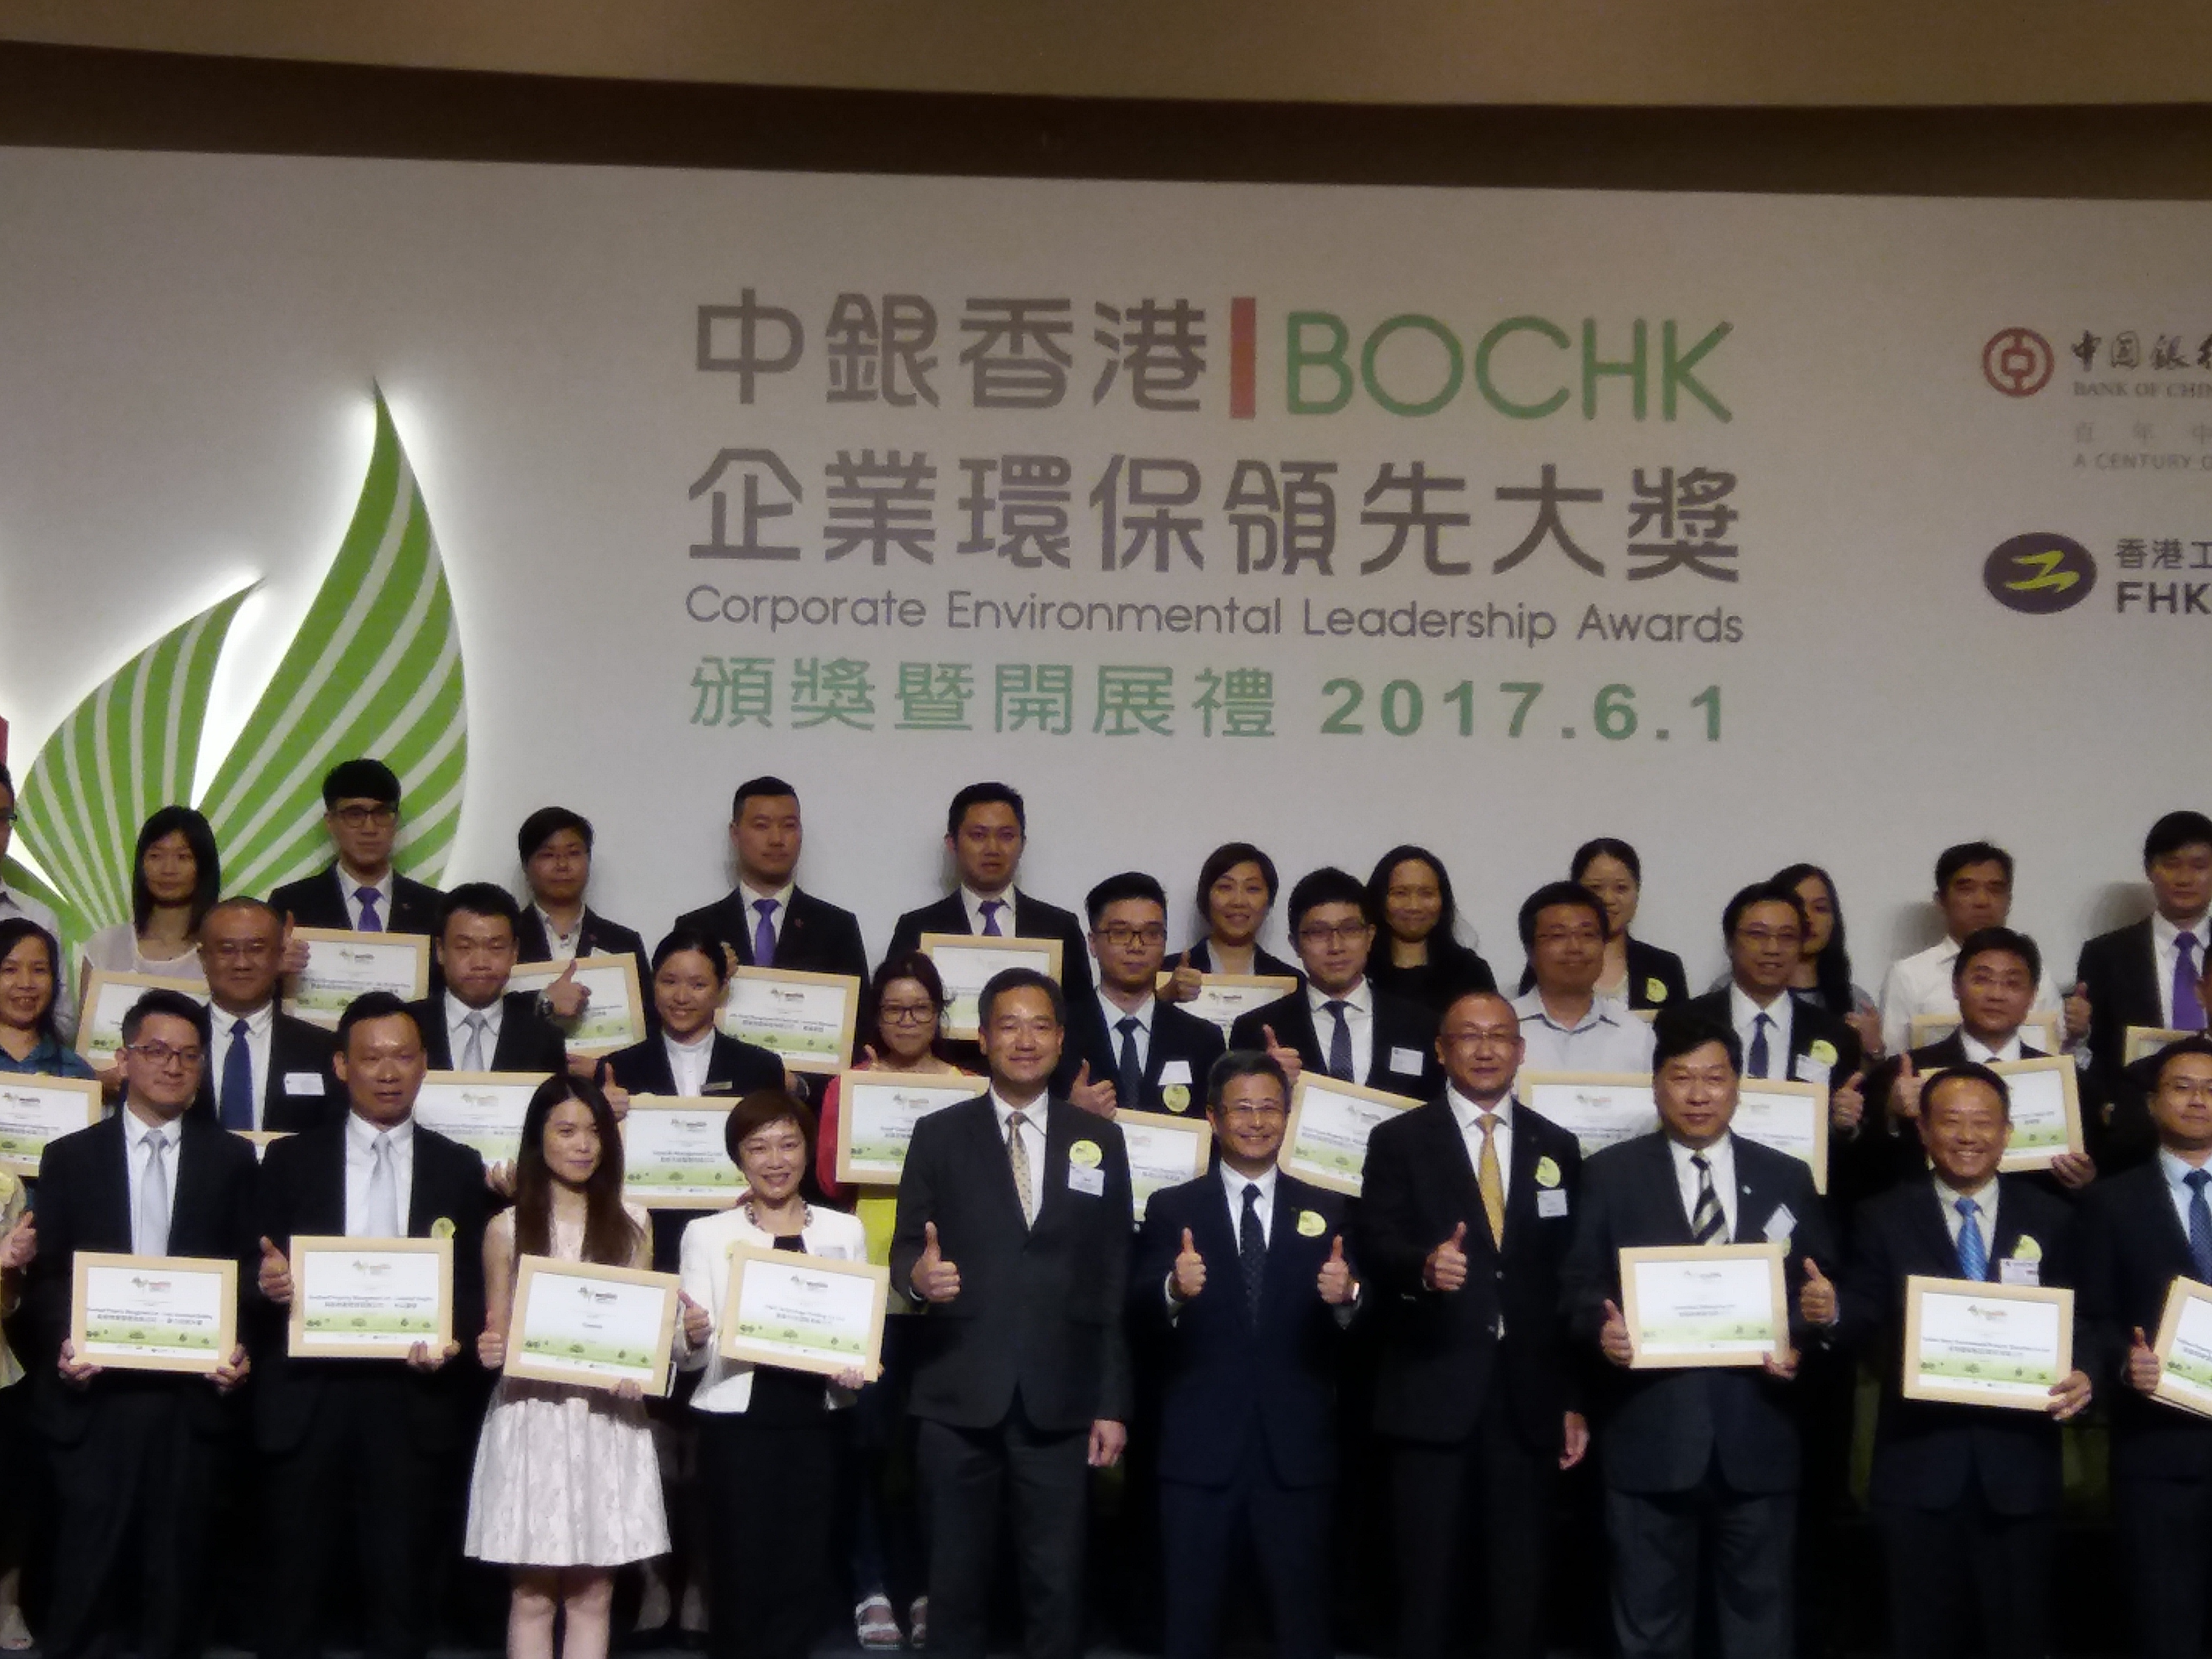 D&G attains “EcoChallenger” award in BOCHK Corporate Environmental Leadership Awards